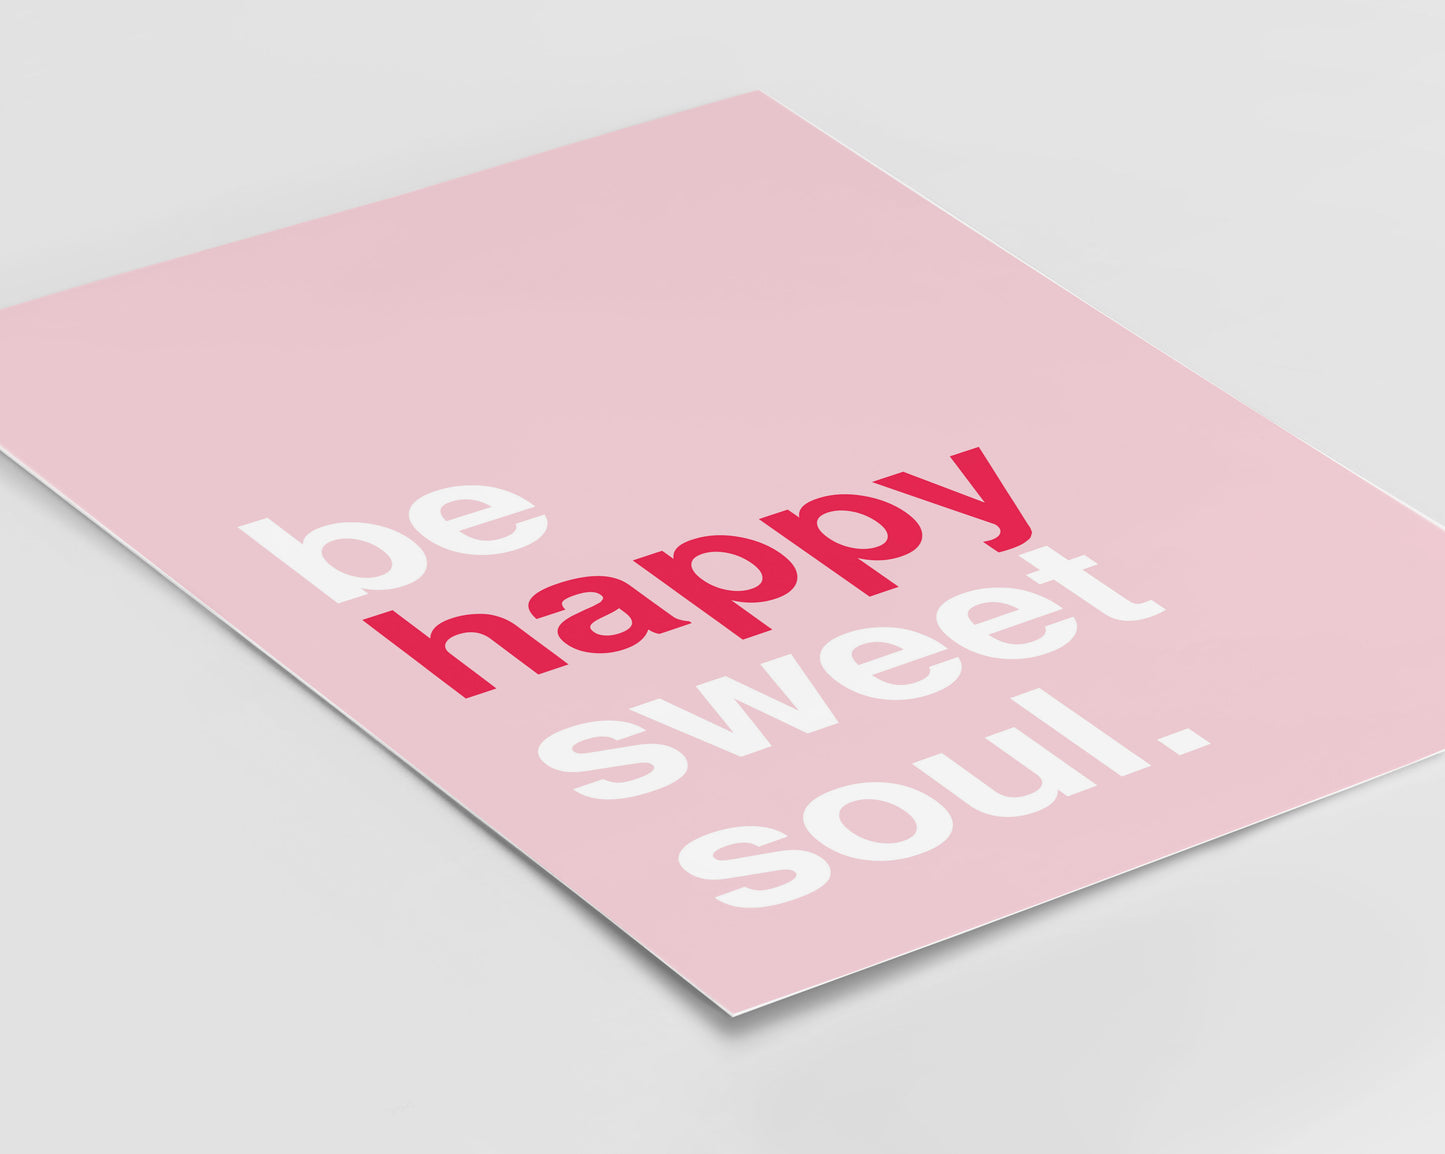 Be Happy Sweet Soul Pink Print